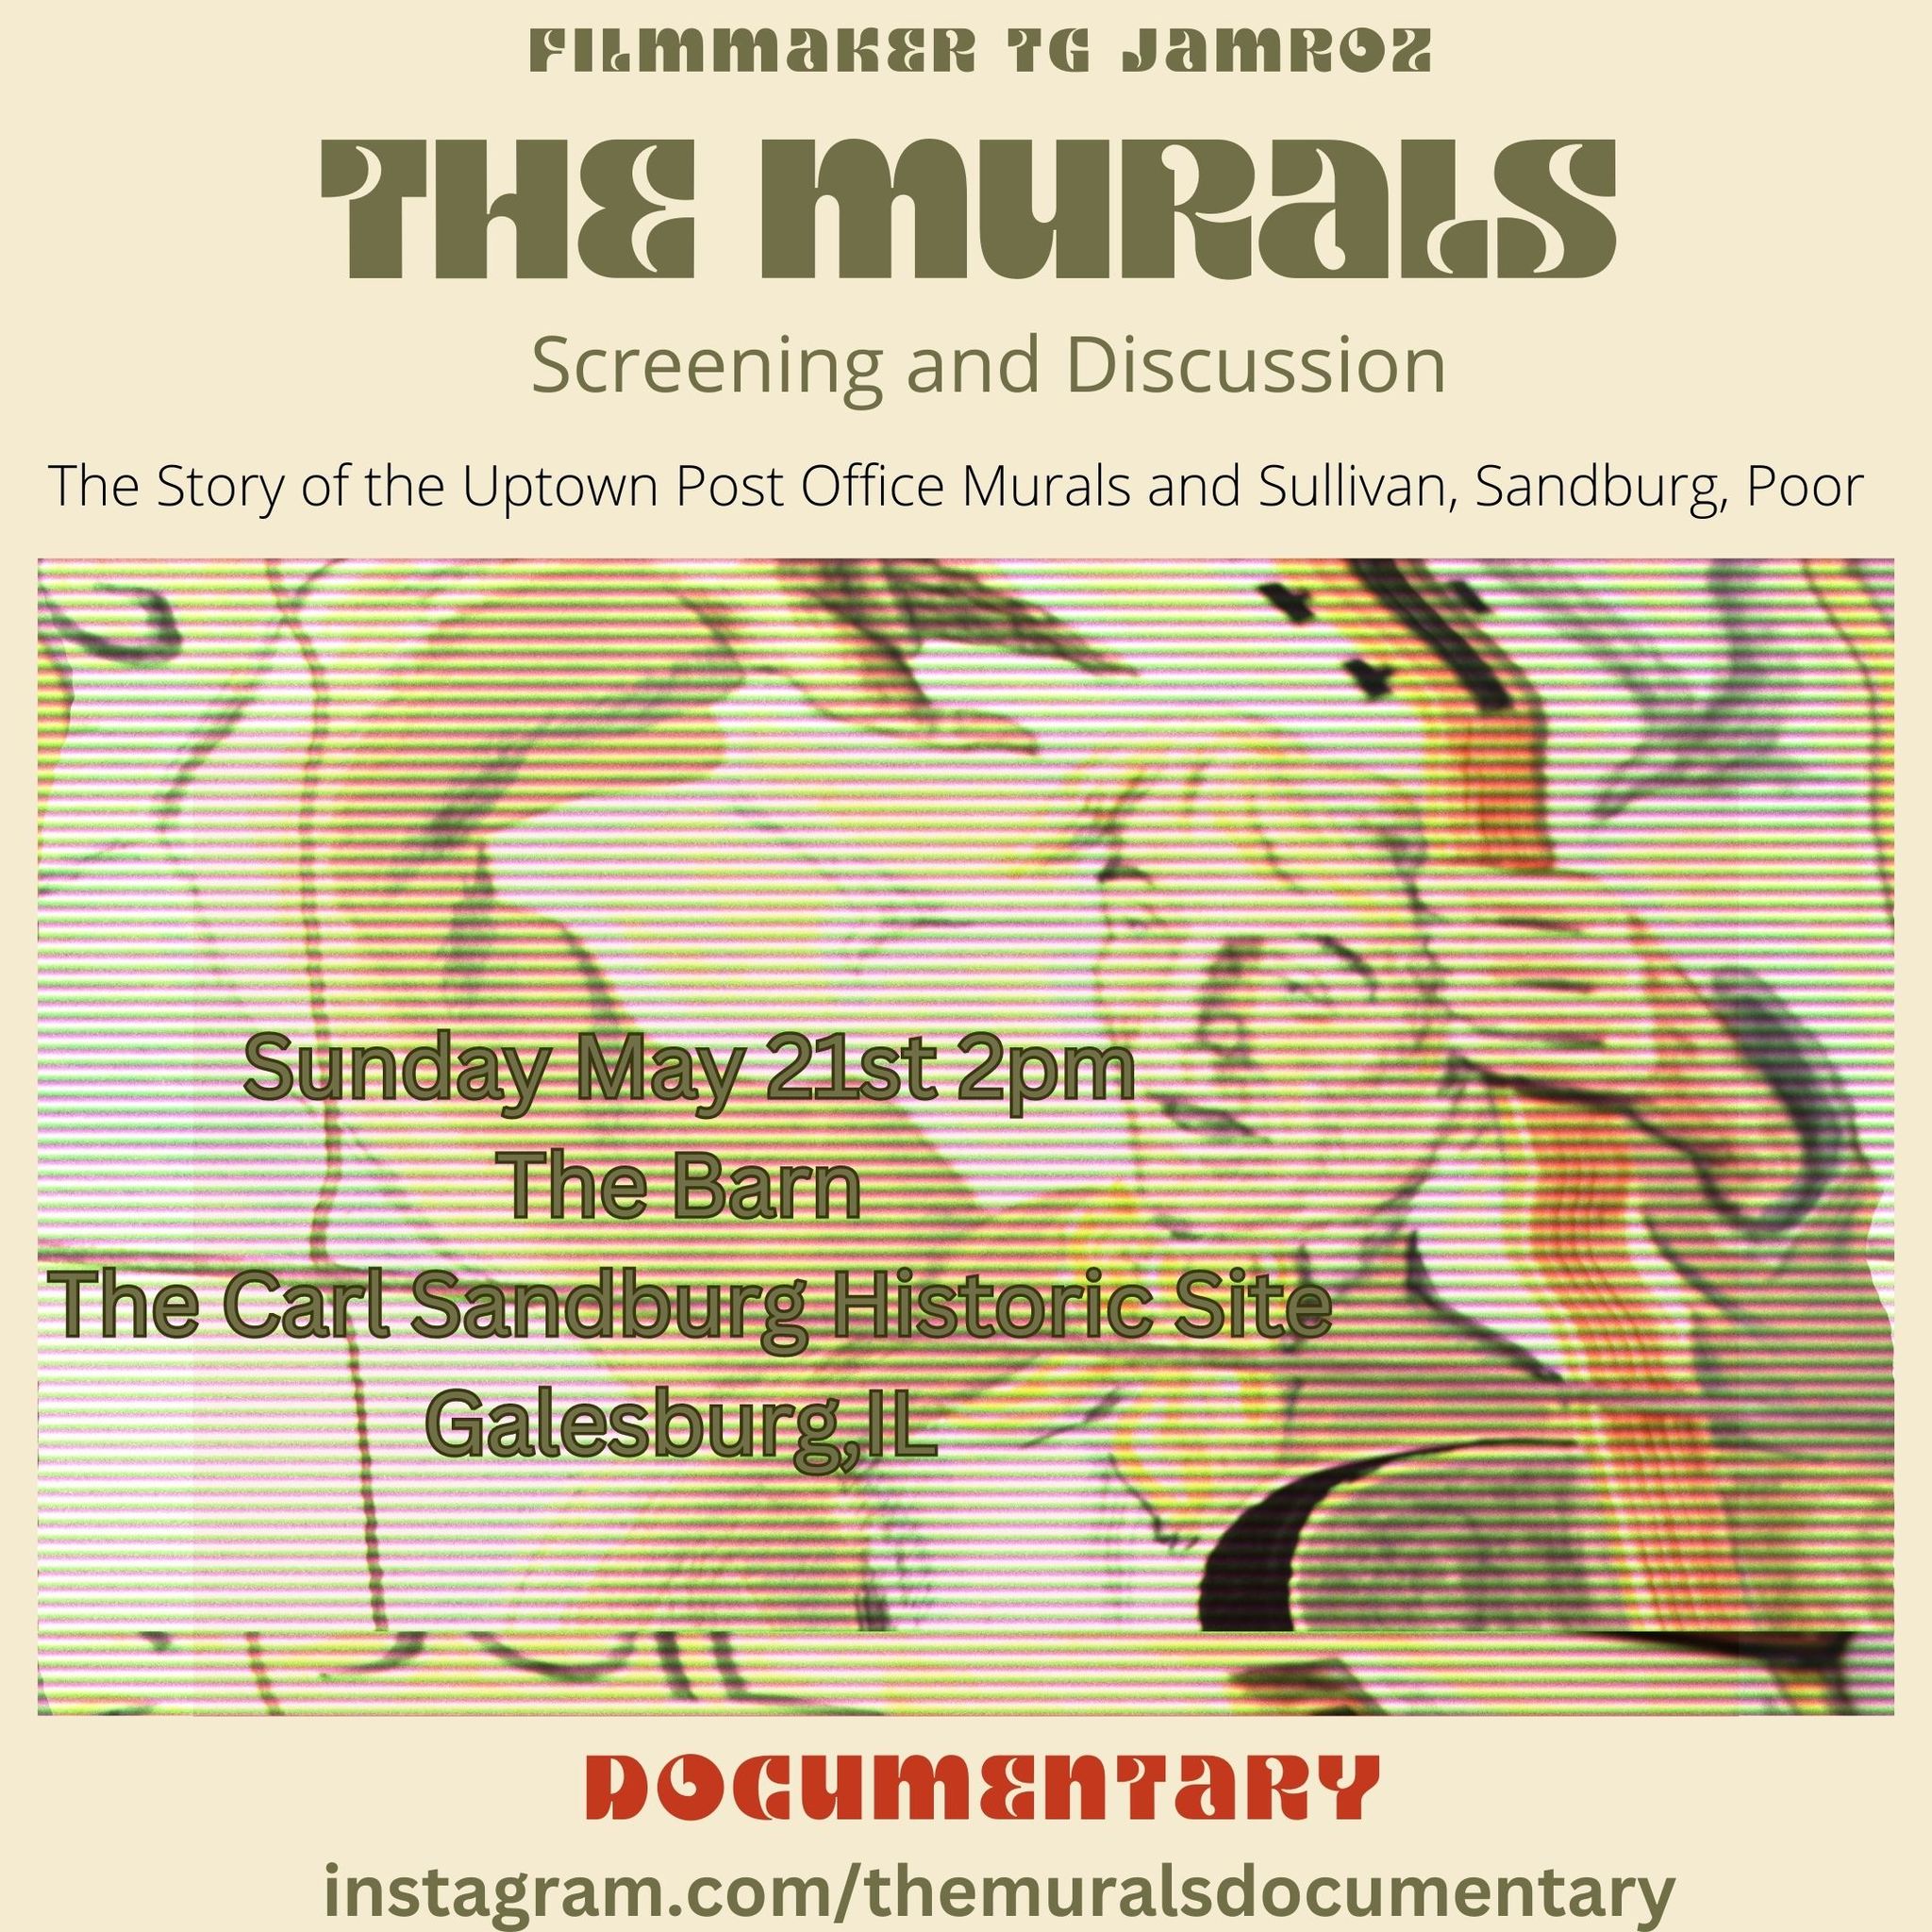 "The Murals" Documentary Film by TG Jamroz